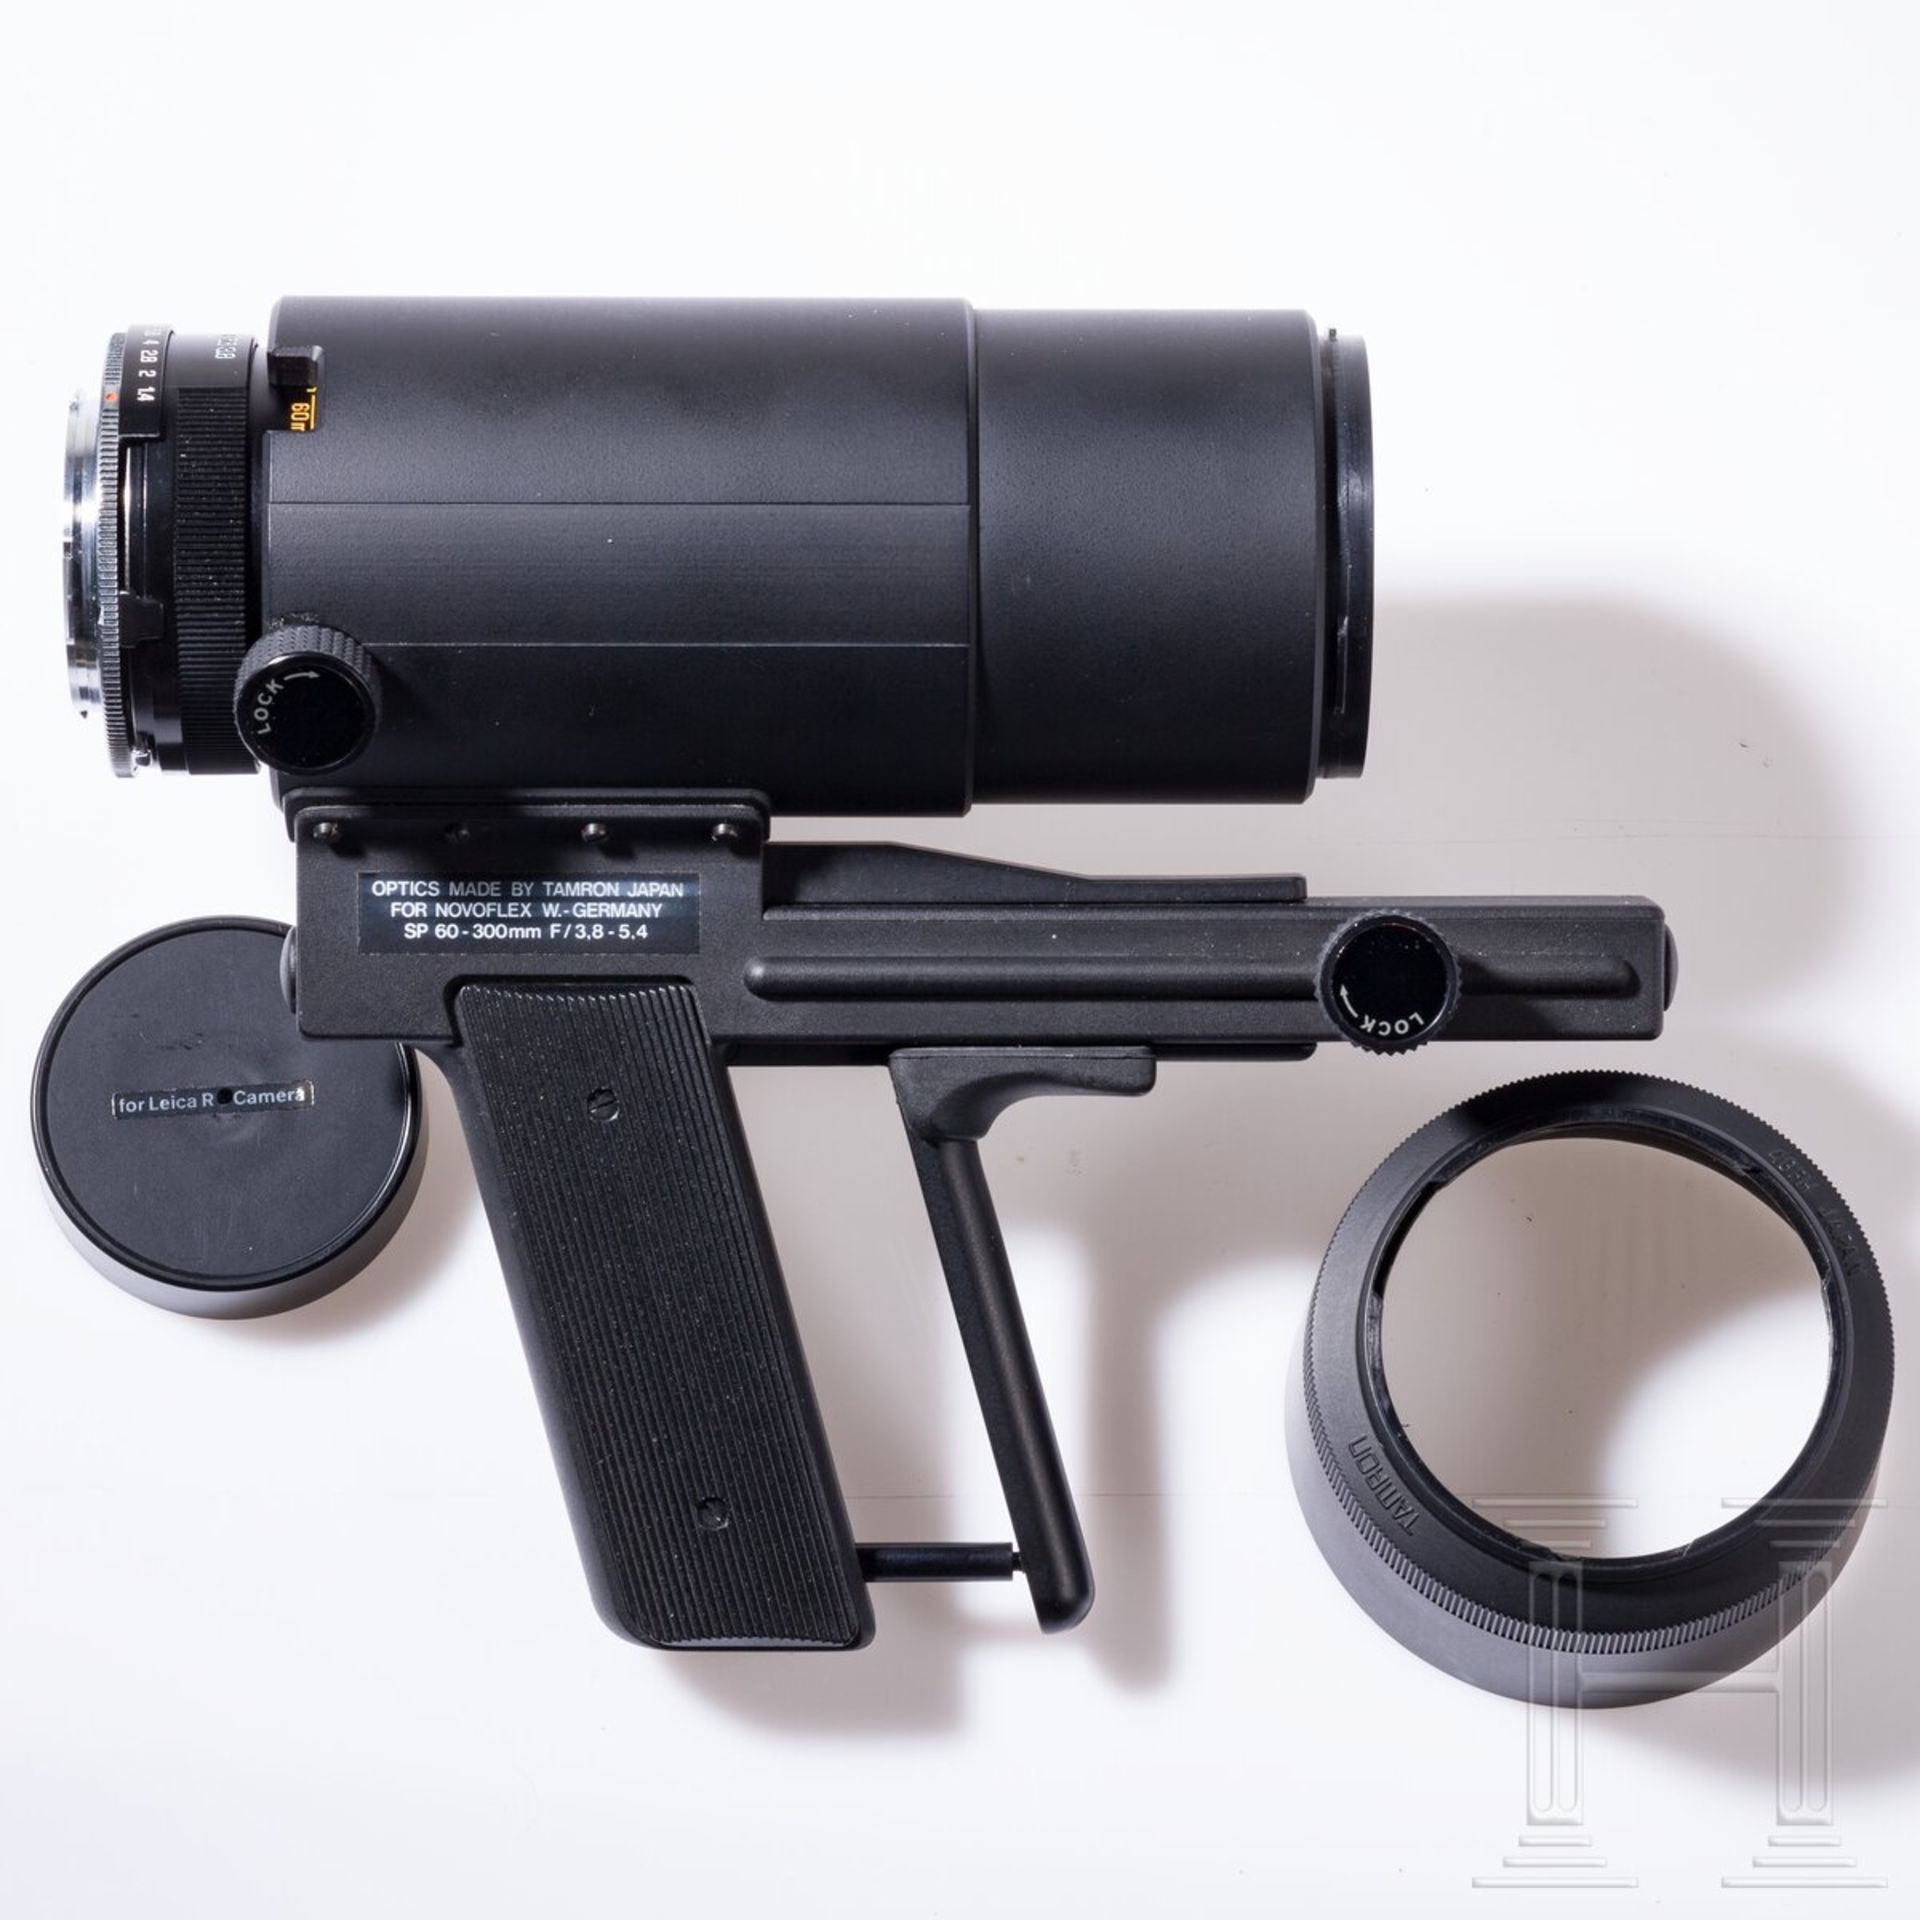 Novoflex-Schnellschuss-Objektiv 3,8 - 5,5/60-300 mm "Follow Focus Lenses" - Image 2 of 6